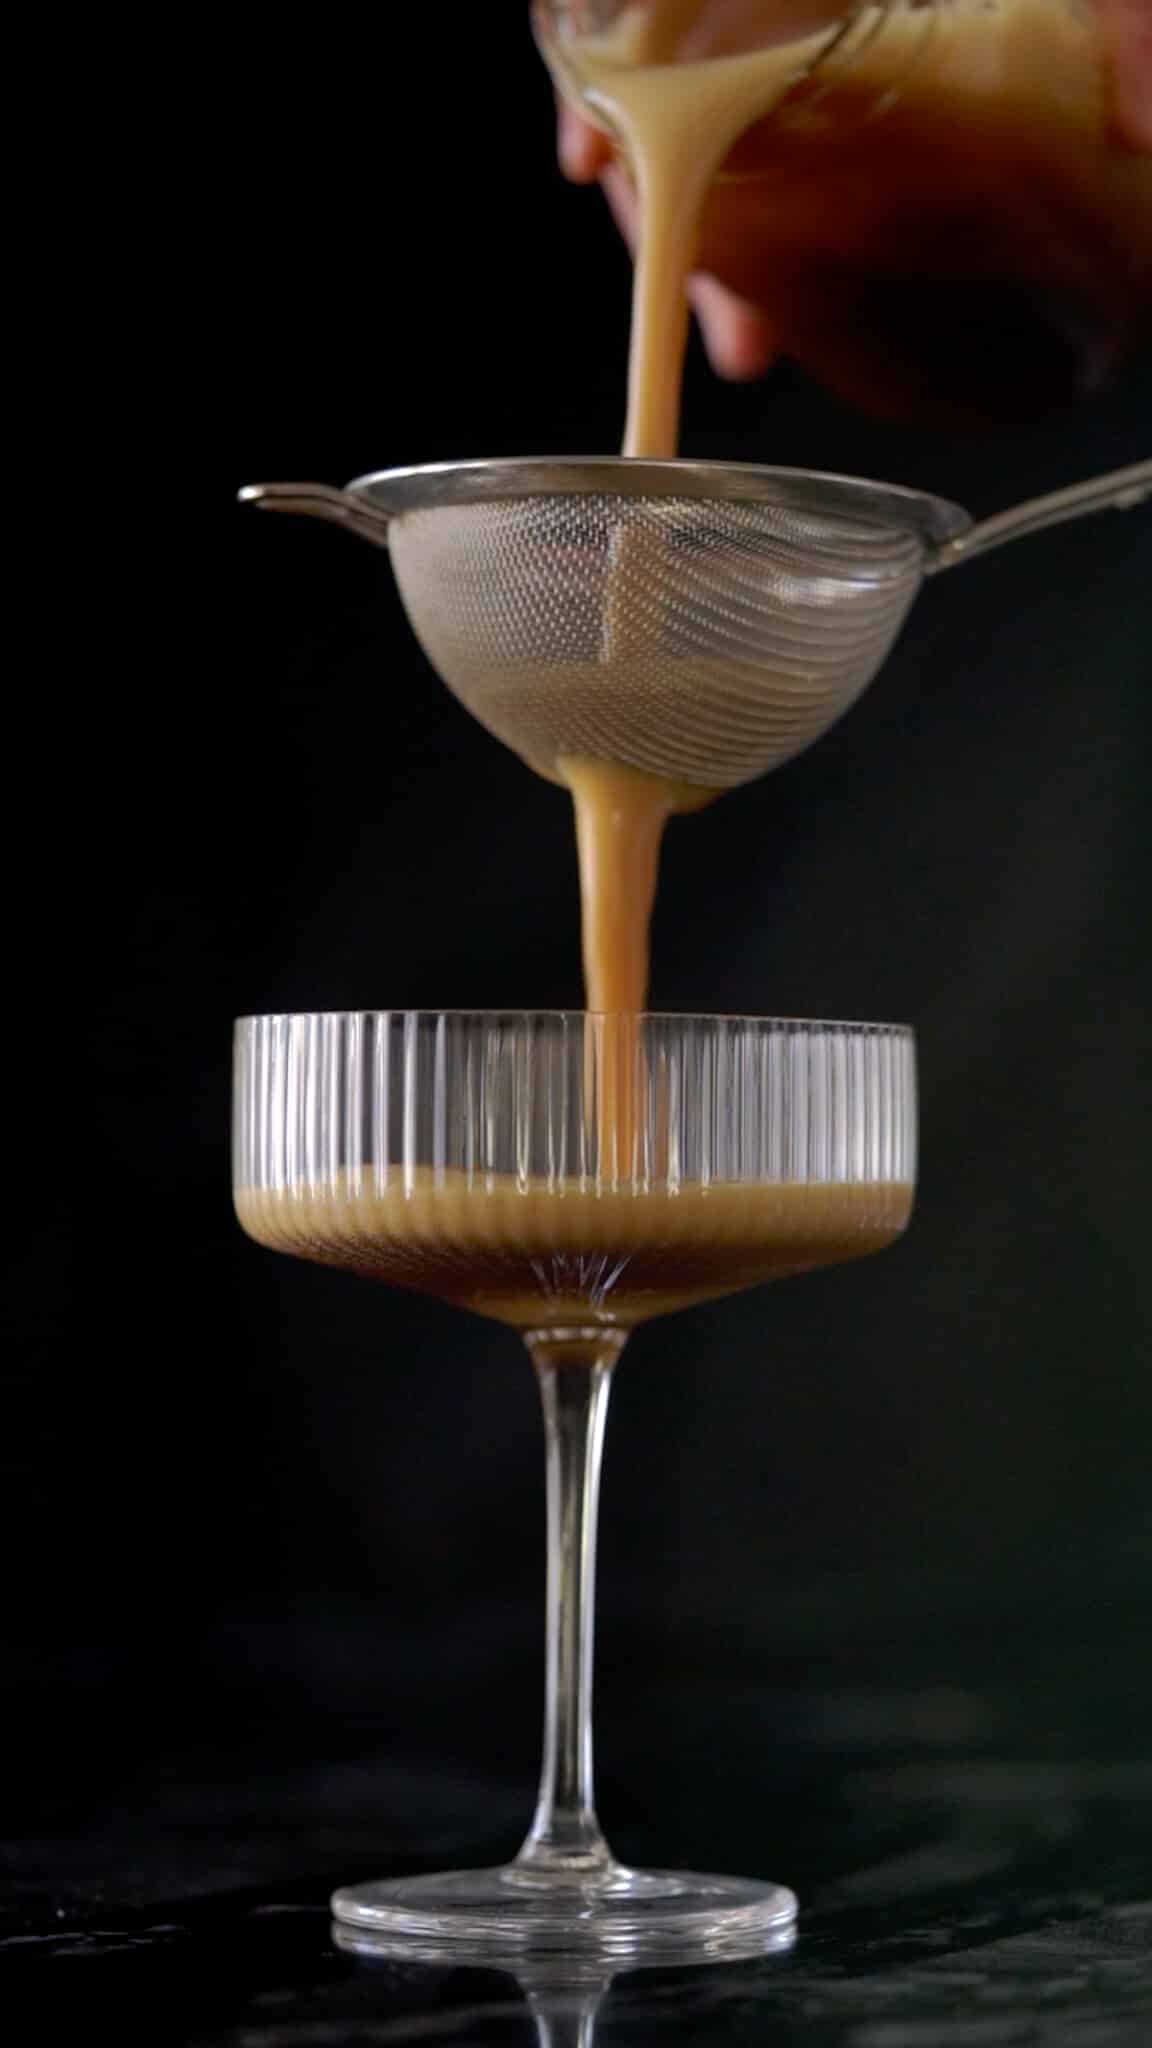 Serving the keto espresso martini through a sieve